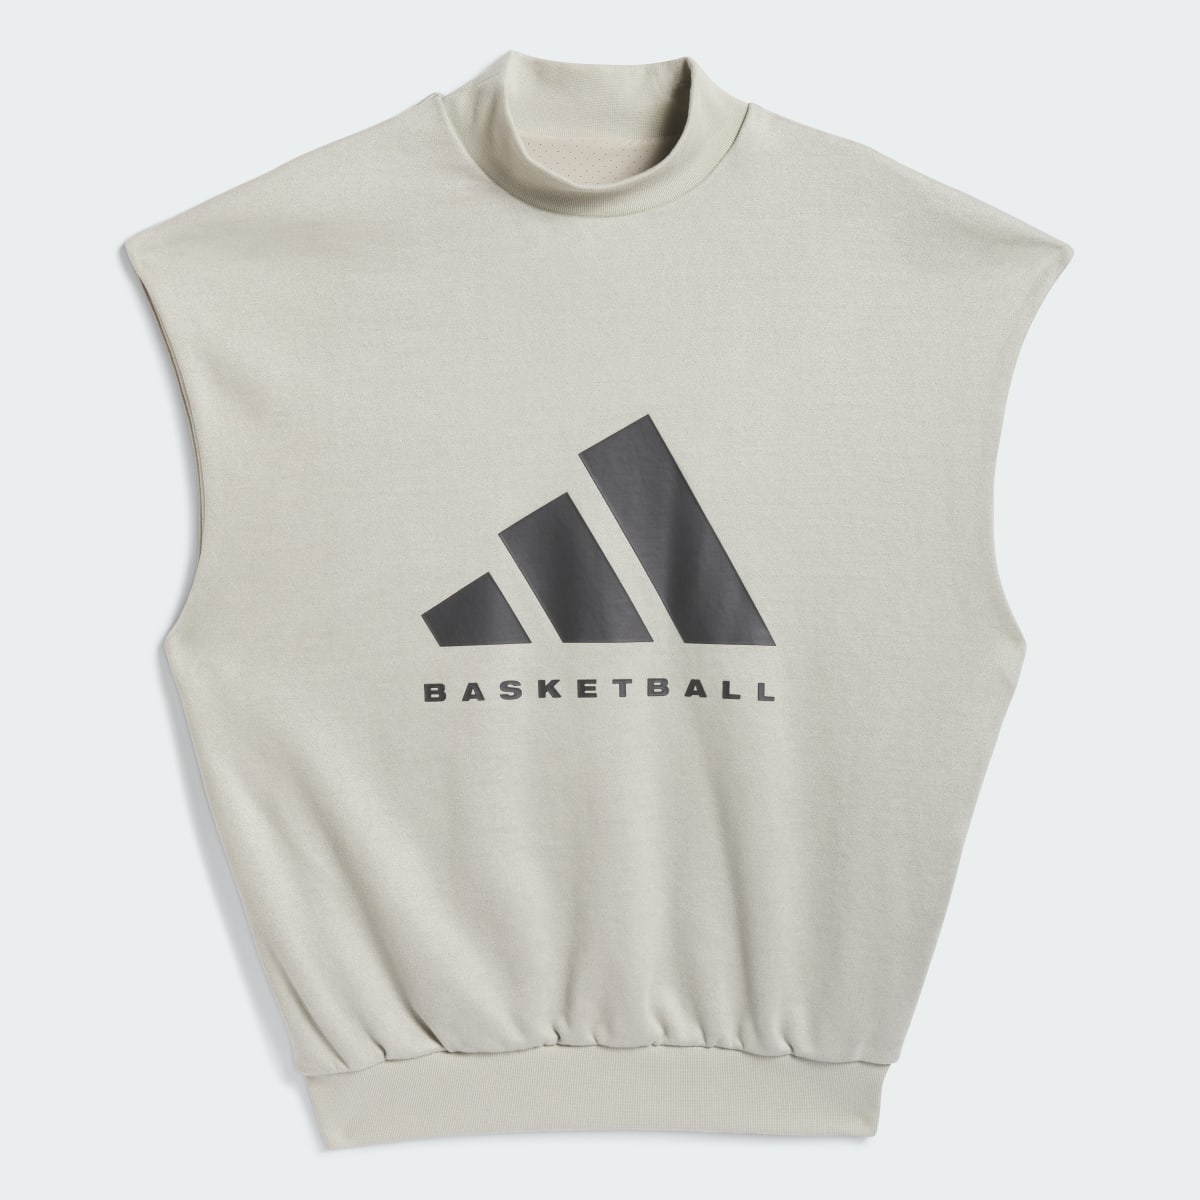 Adidas Basketball Sueded Sleeveless Sweatshirt. 4